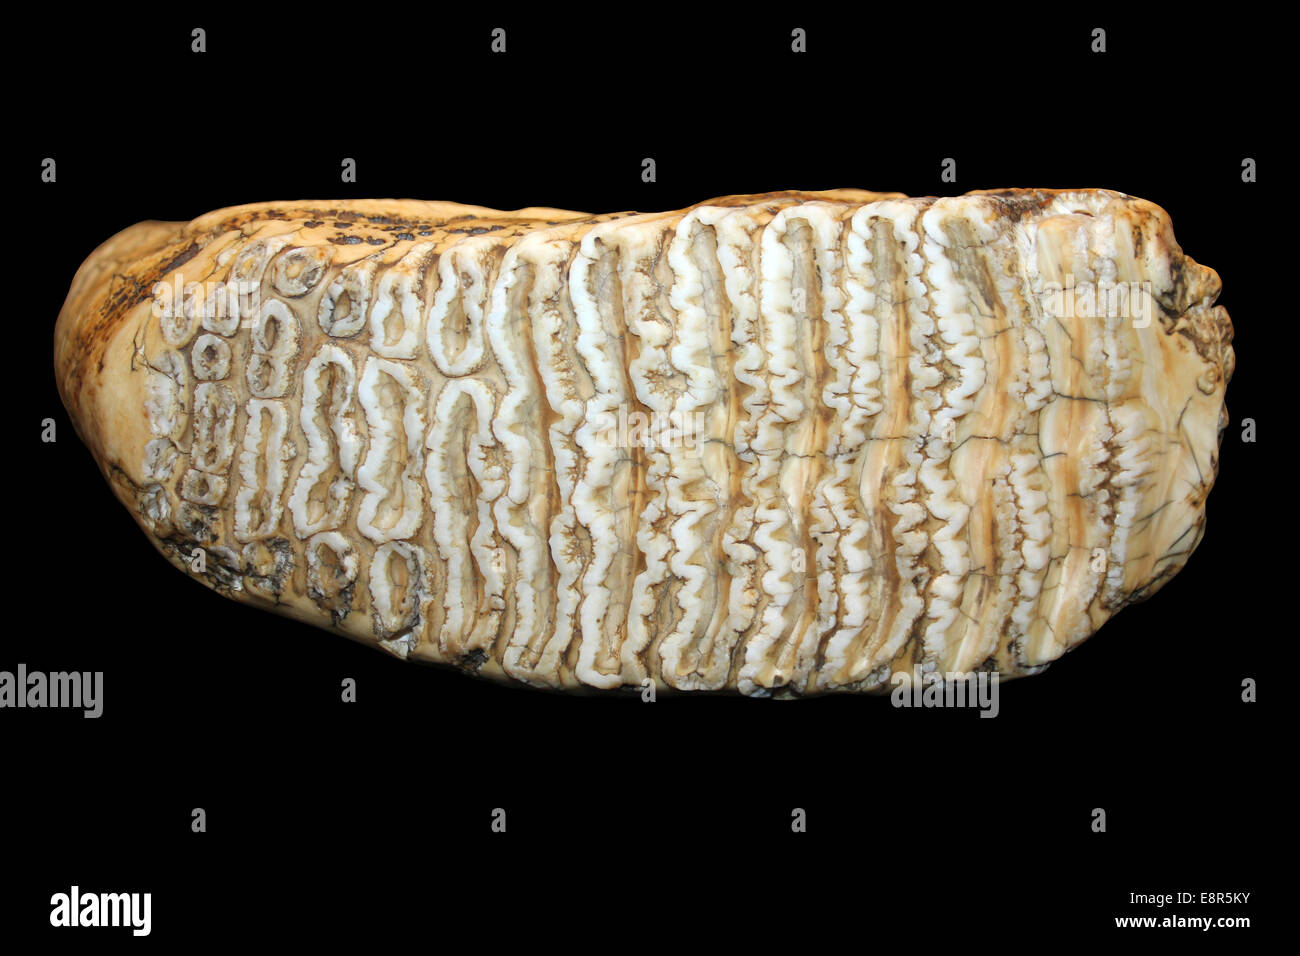 Tooth Of An Indian Elephant Showing Ridges (laminae) Stock Photo